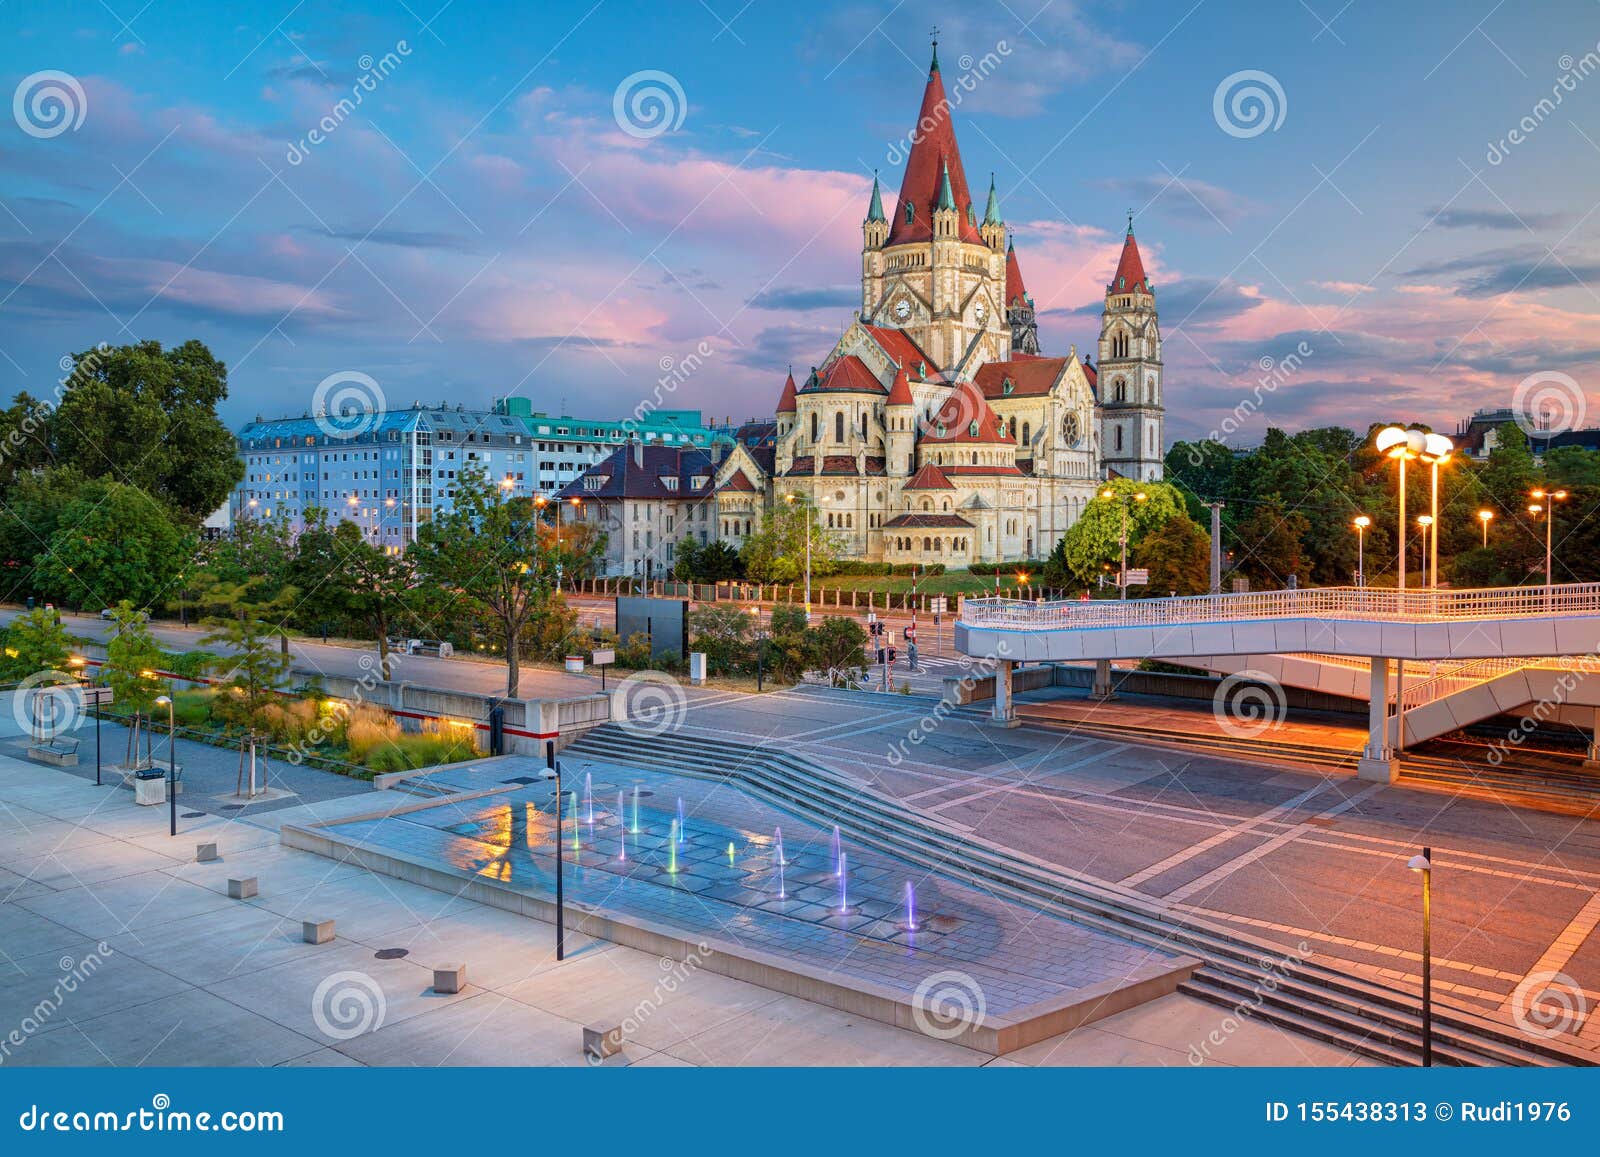 Vienna, Austria. stock image. Image of capital, building - 155438313